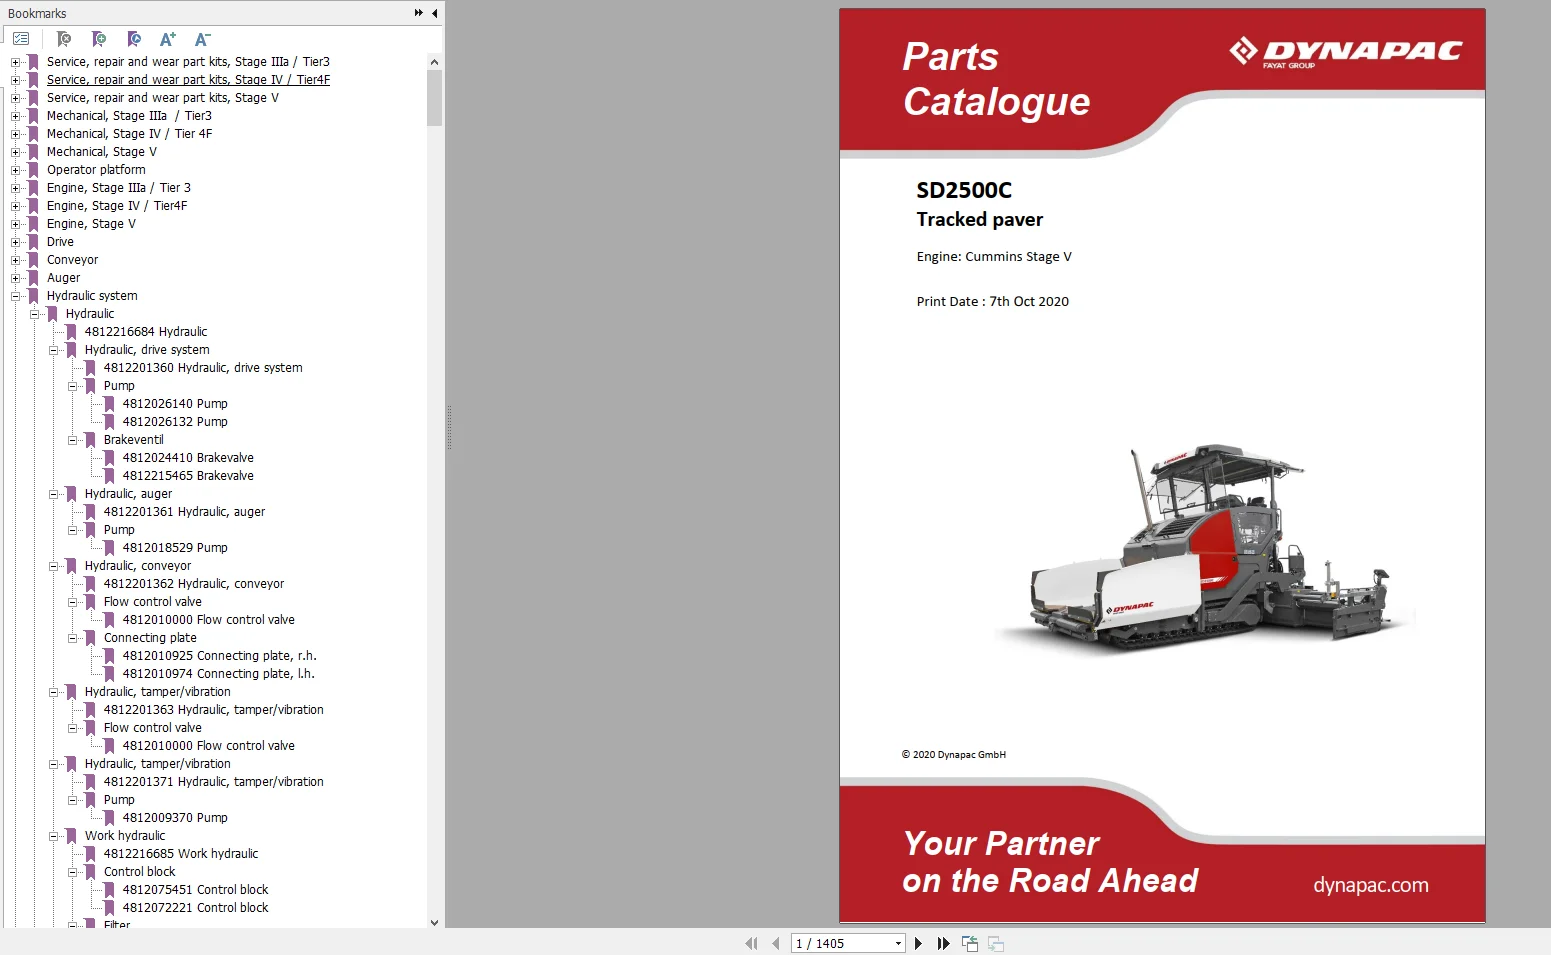 

Dynapac Heavy Equipment 29.7 GB PDF Part Catalog Updated 2022 Full DVD